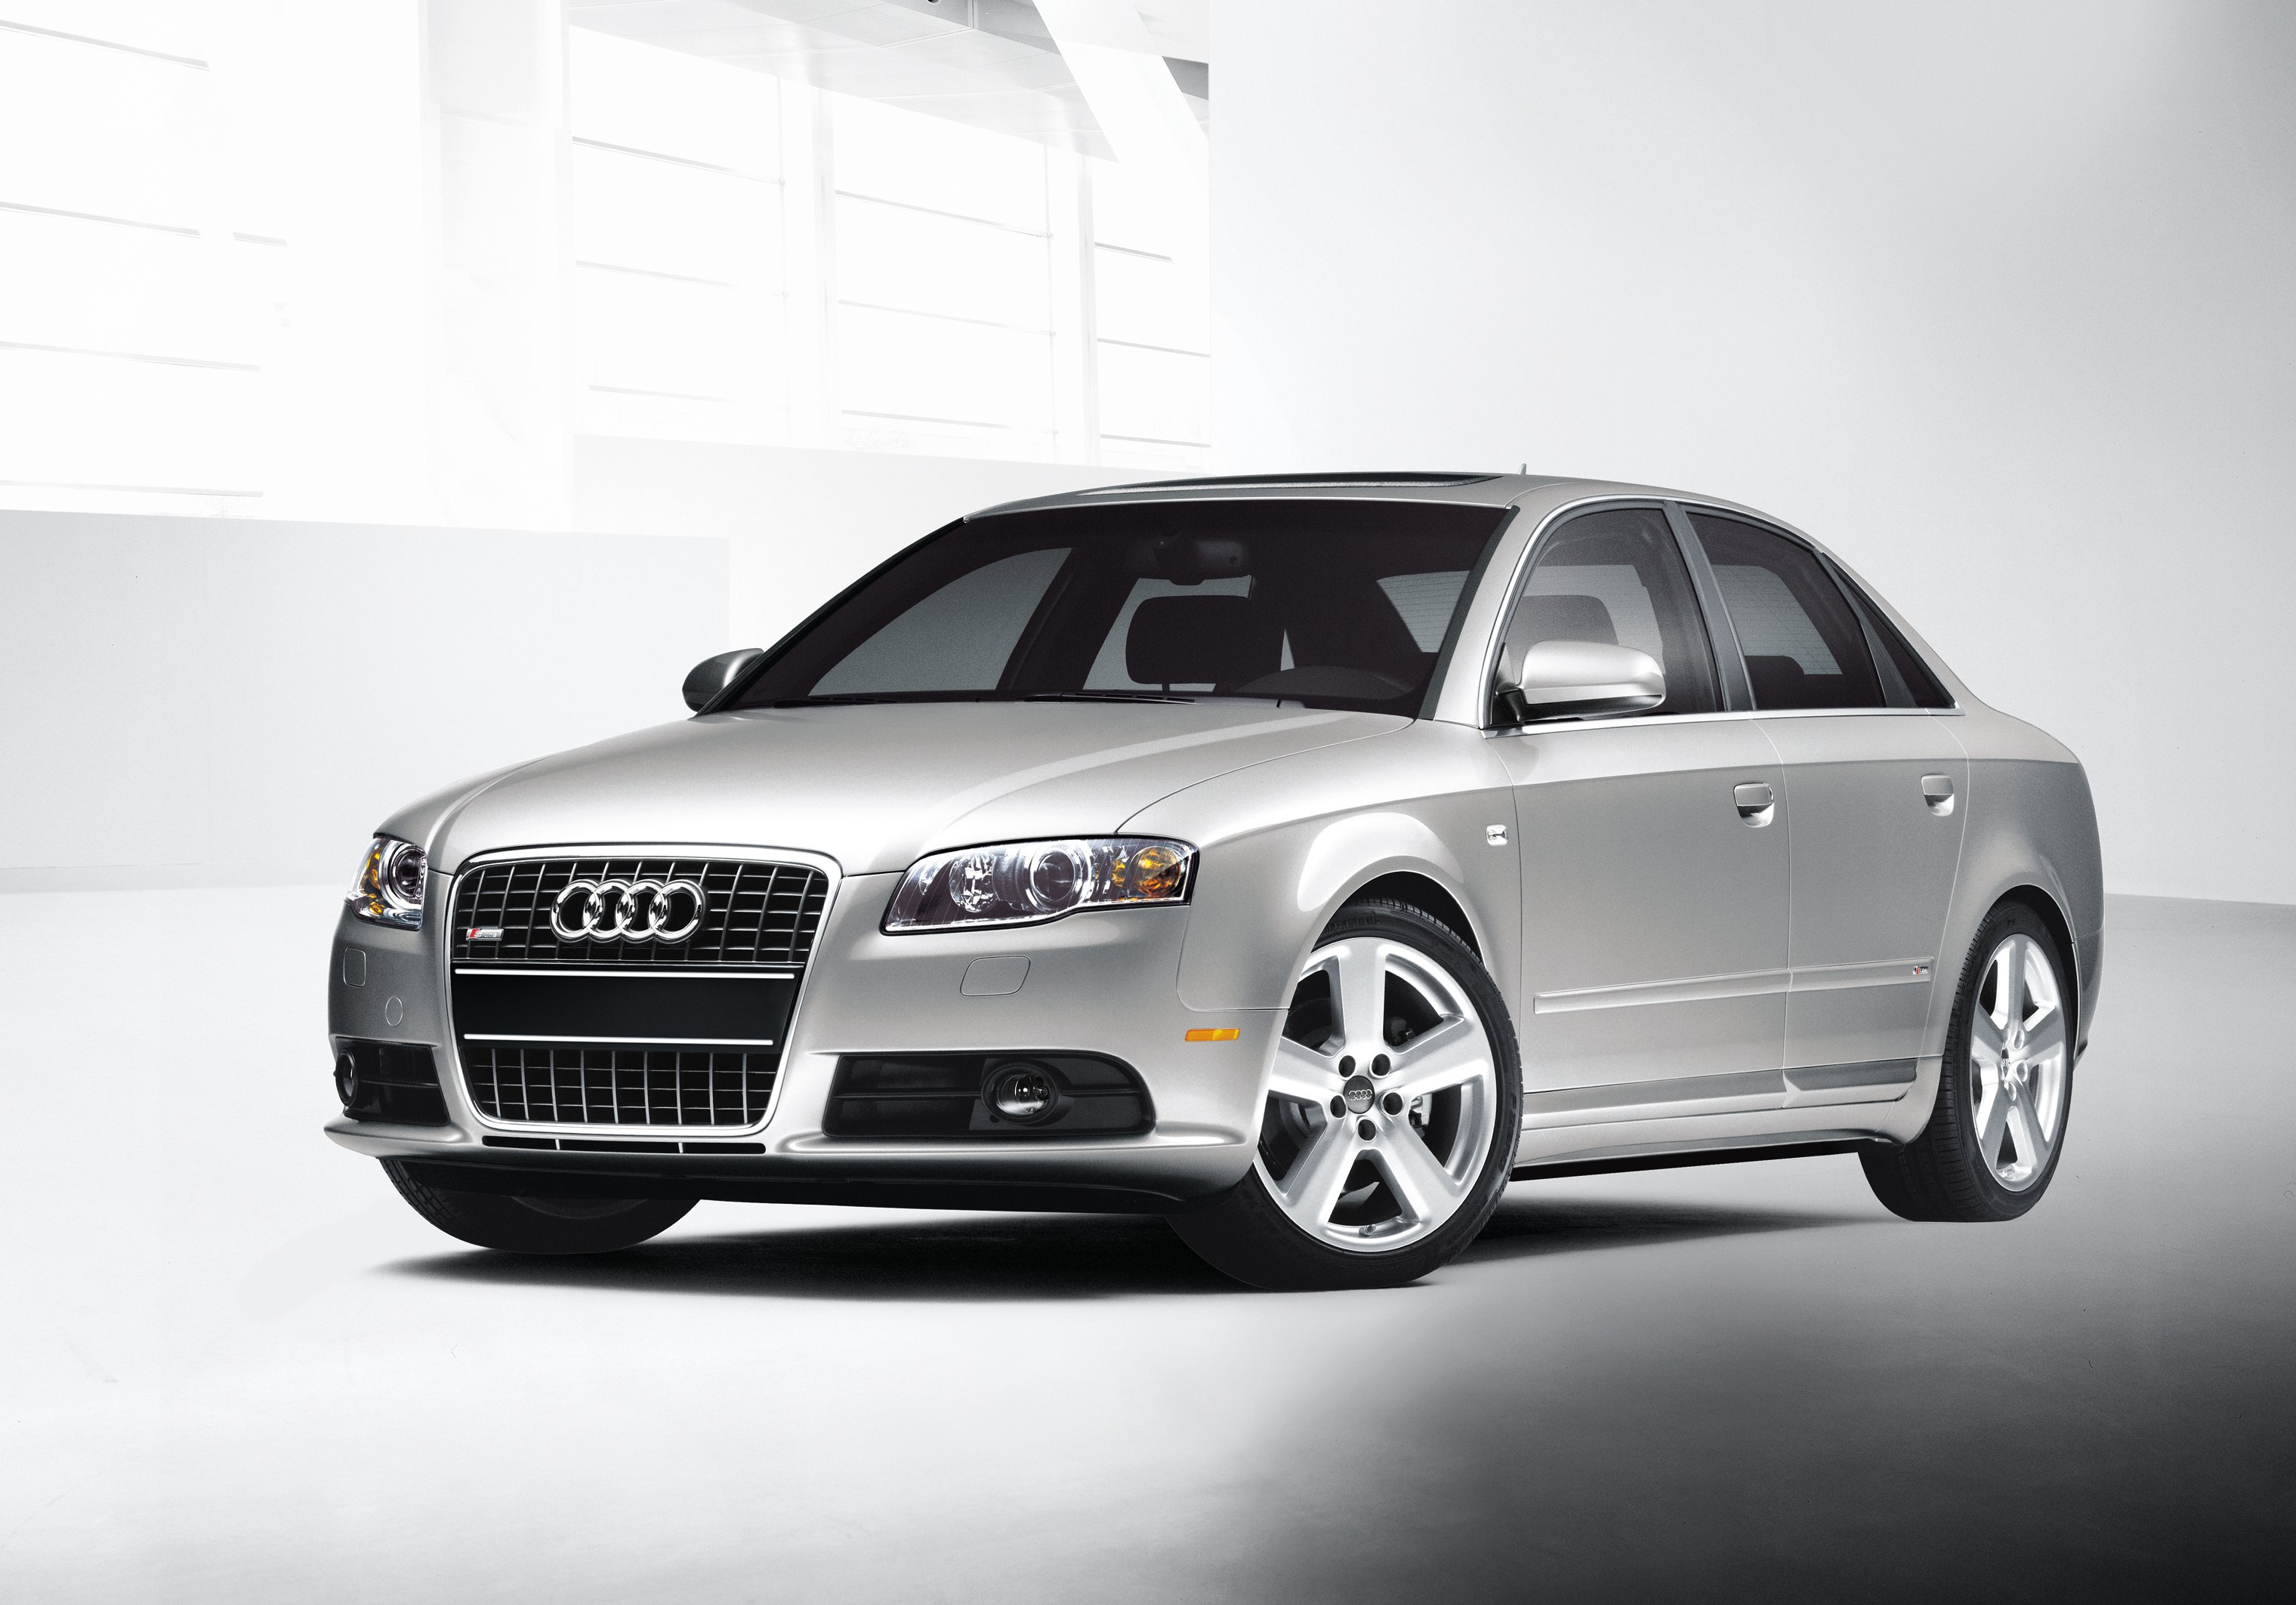 Ауди а4 2008 купить. Audi a4 (b7) 2004-2008. Audi a4 b7 Sline. Audi a4 2007. Audi a4 b7 2008.